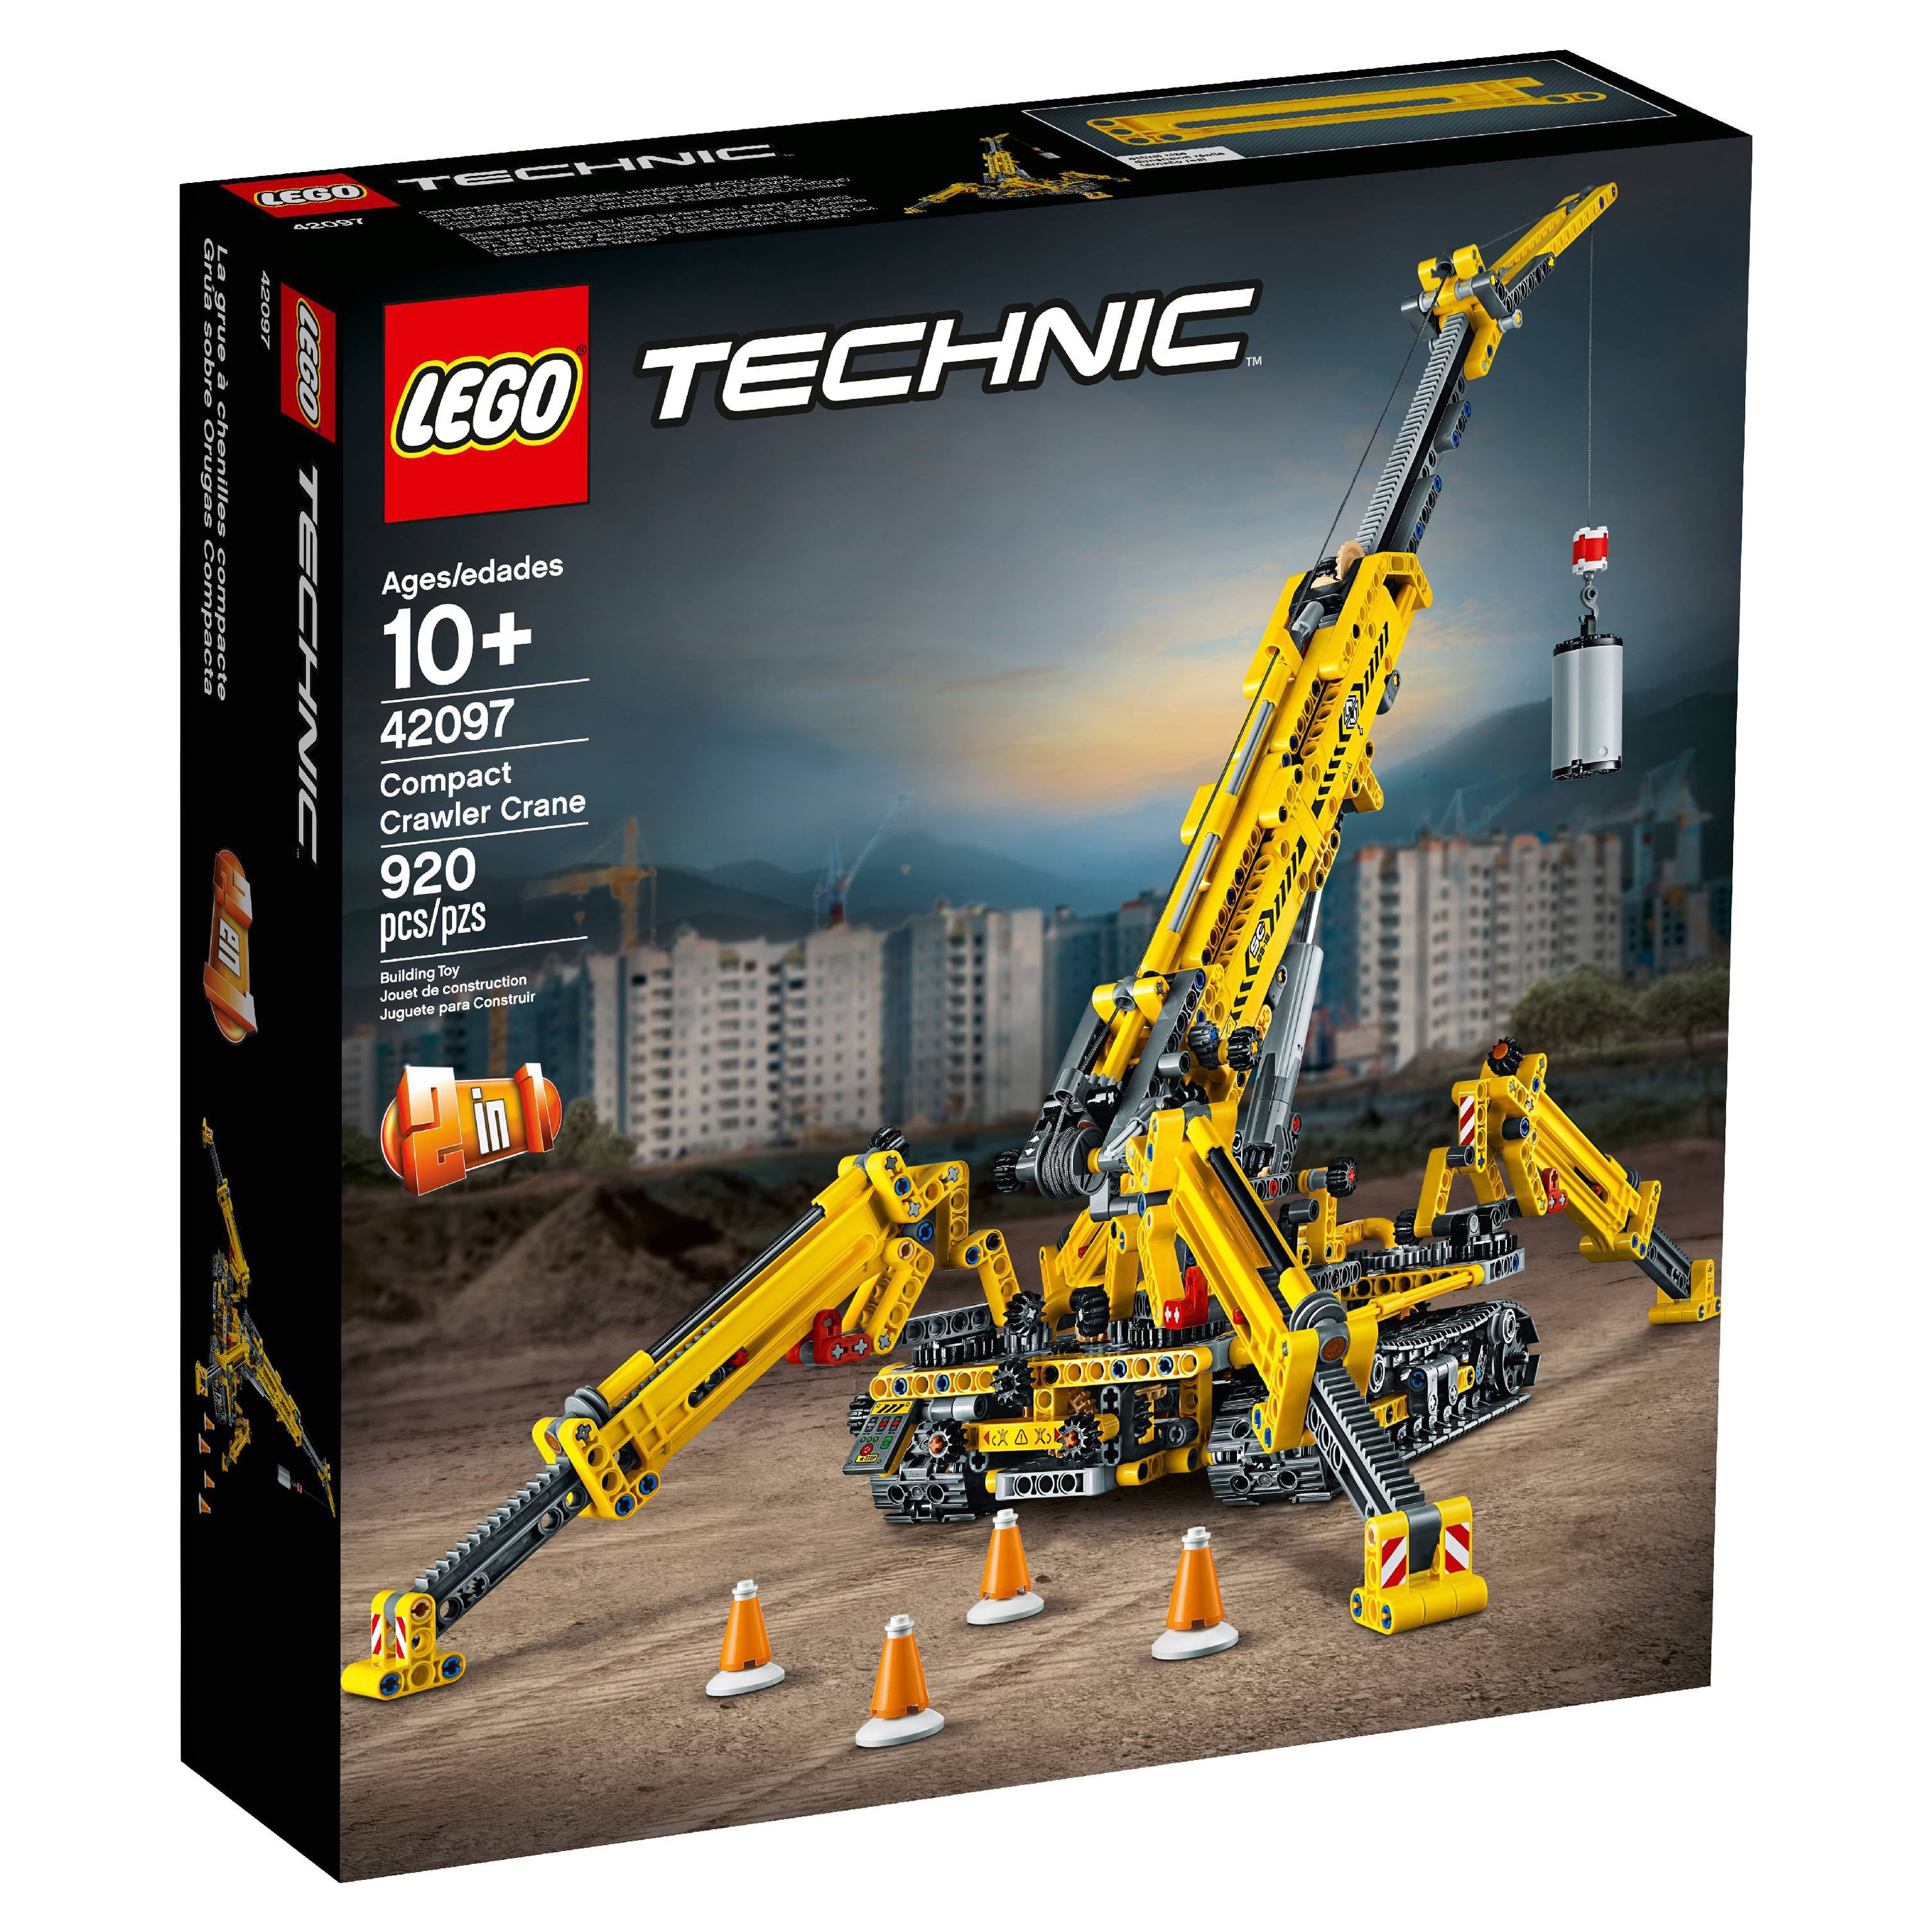 LEGO Technic Compact Crawler Crane 42097 Construction Model Crane Set (920 Pieces) - image 5 of 8